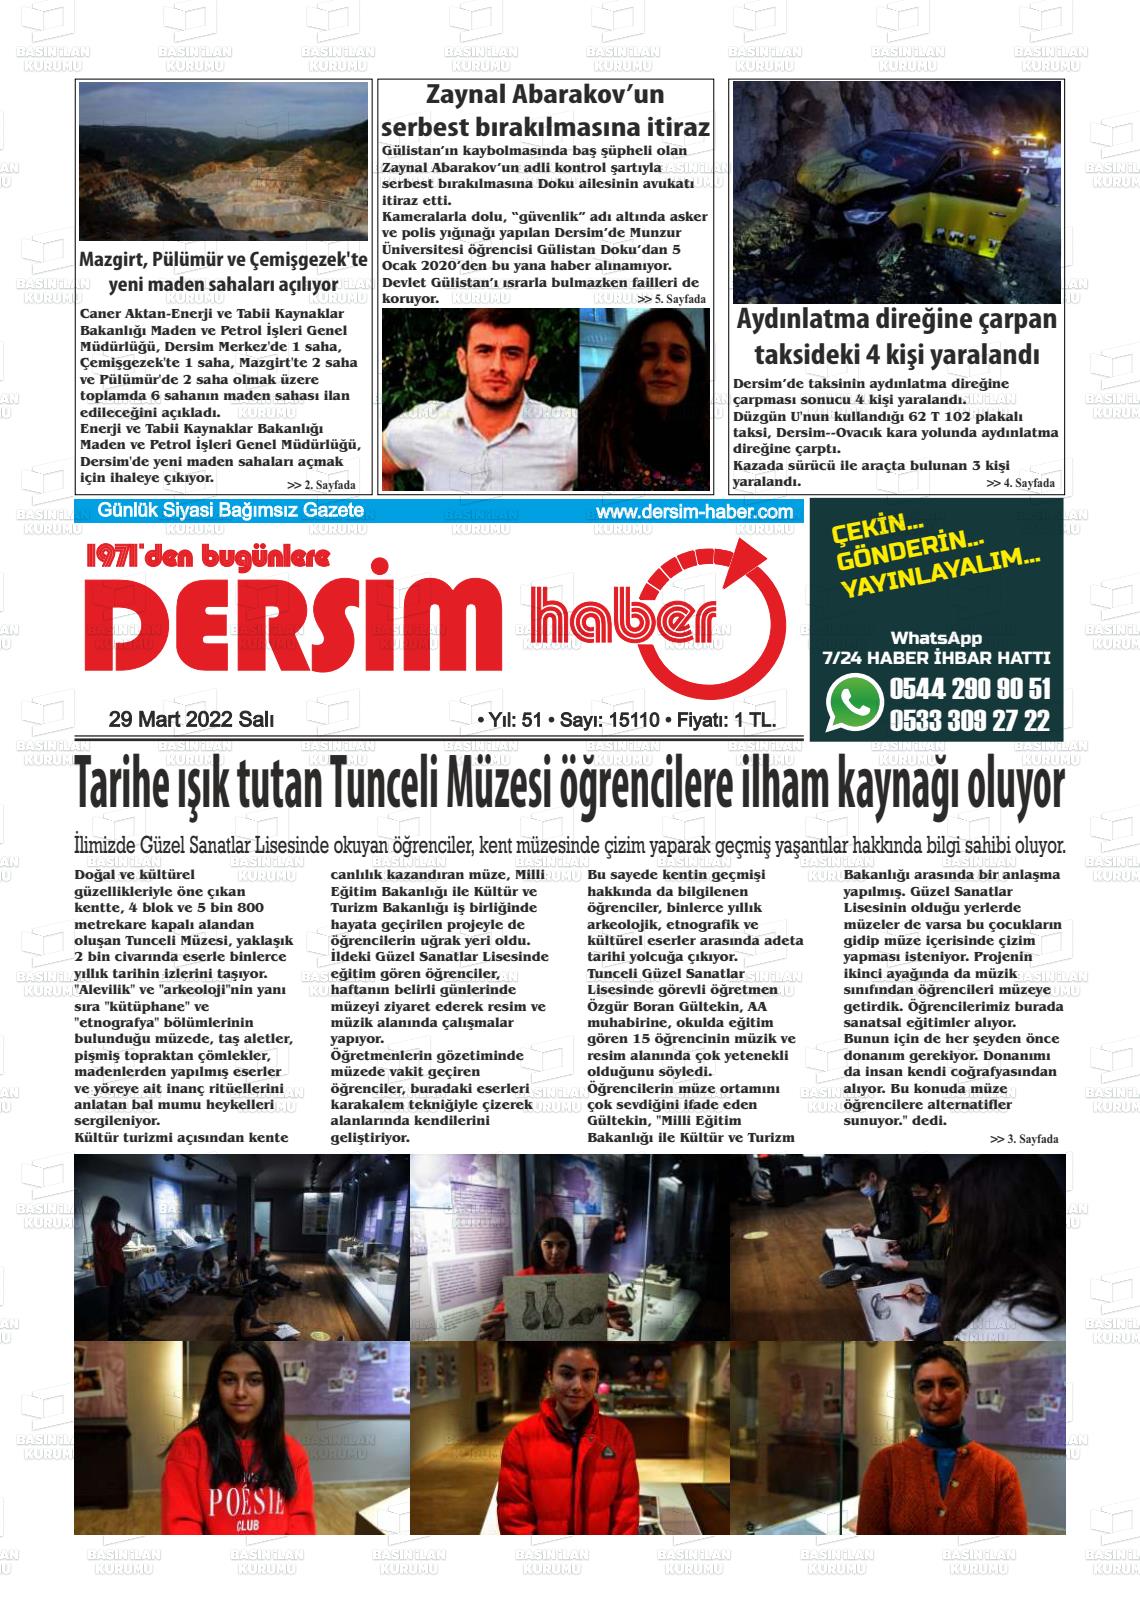 29 mart 2022 tarihli dersİm haber gazete manşetleri